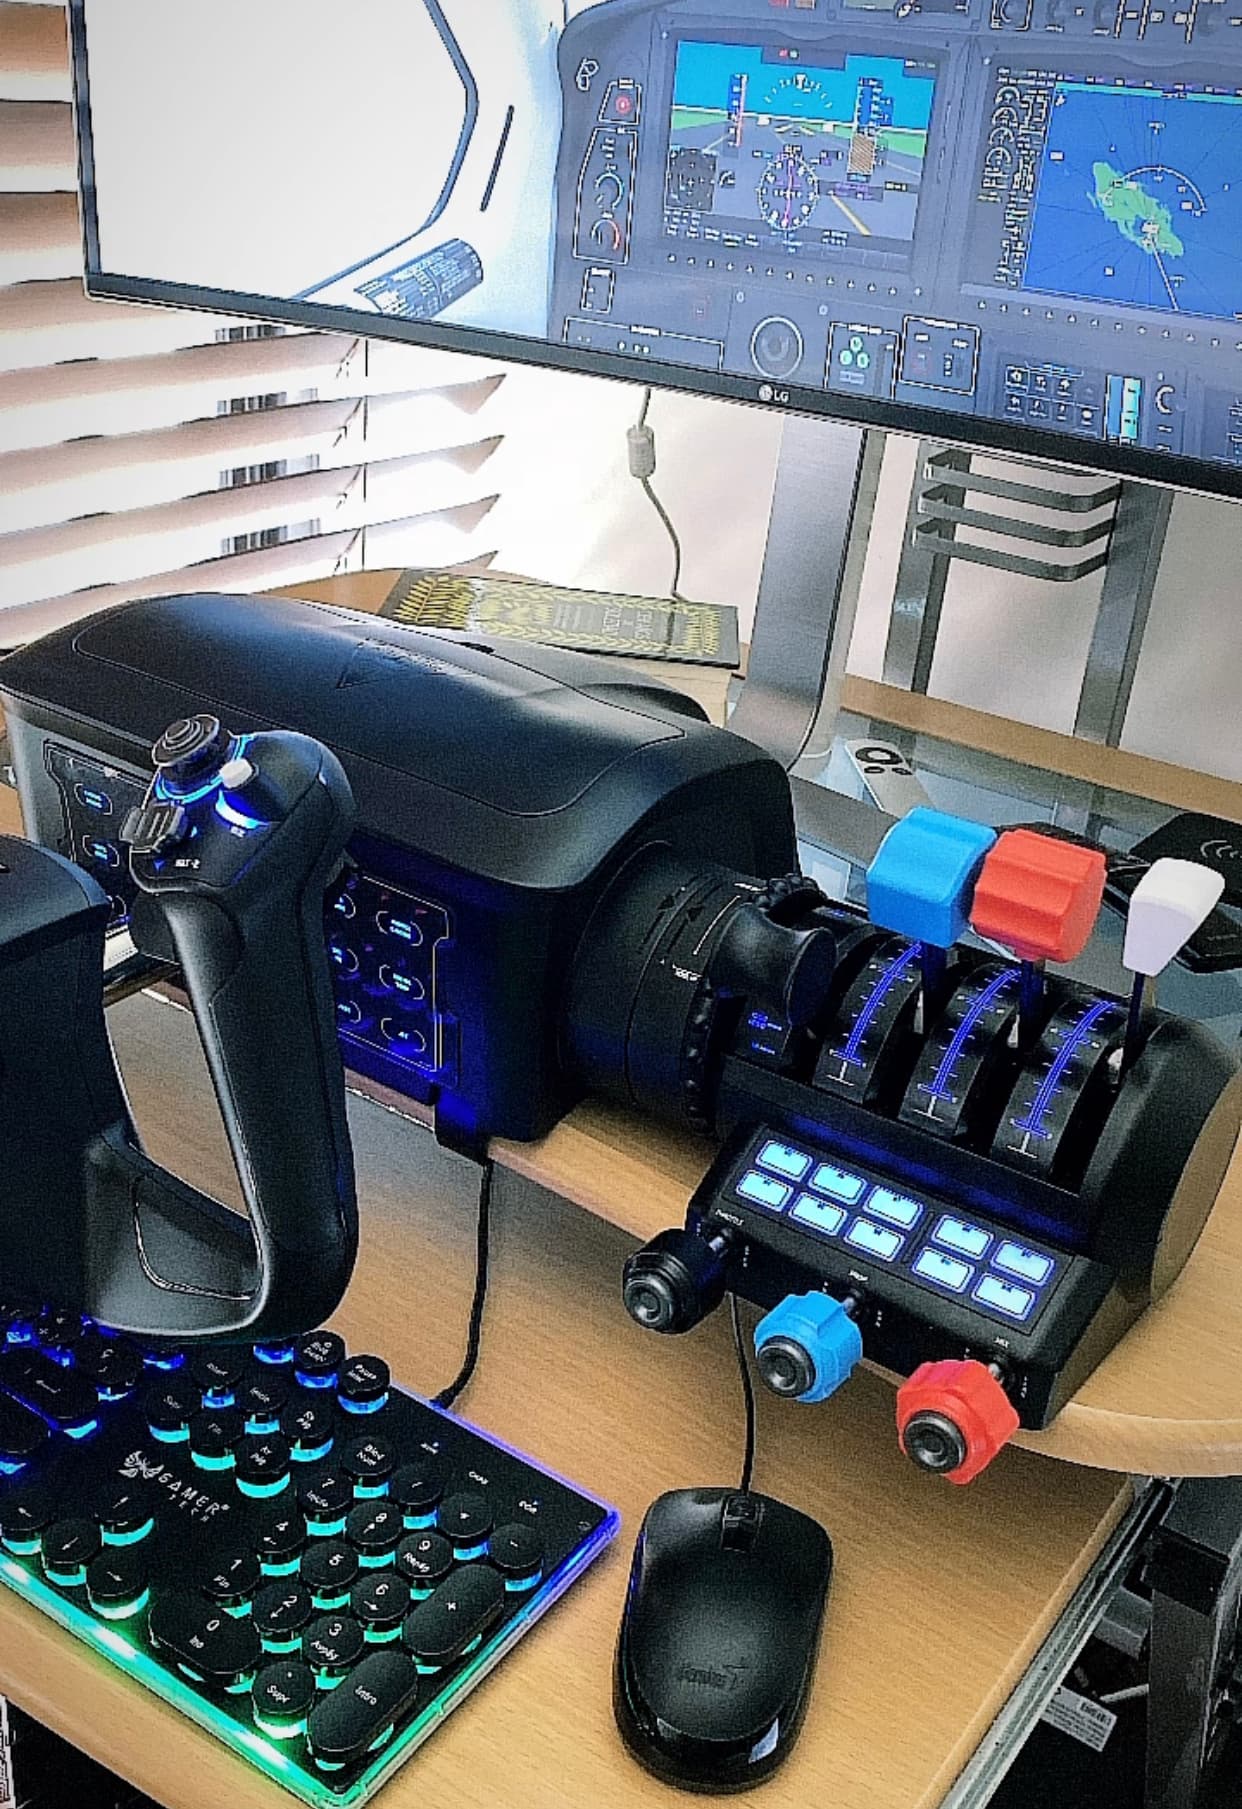 VelocityOne Rudder Pedals For Flight & Racing Simulation